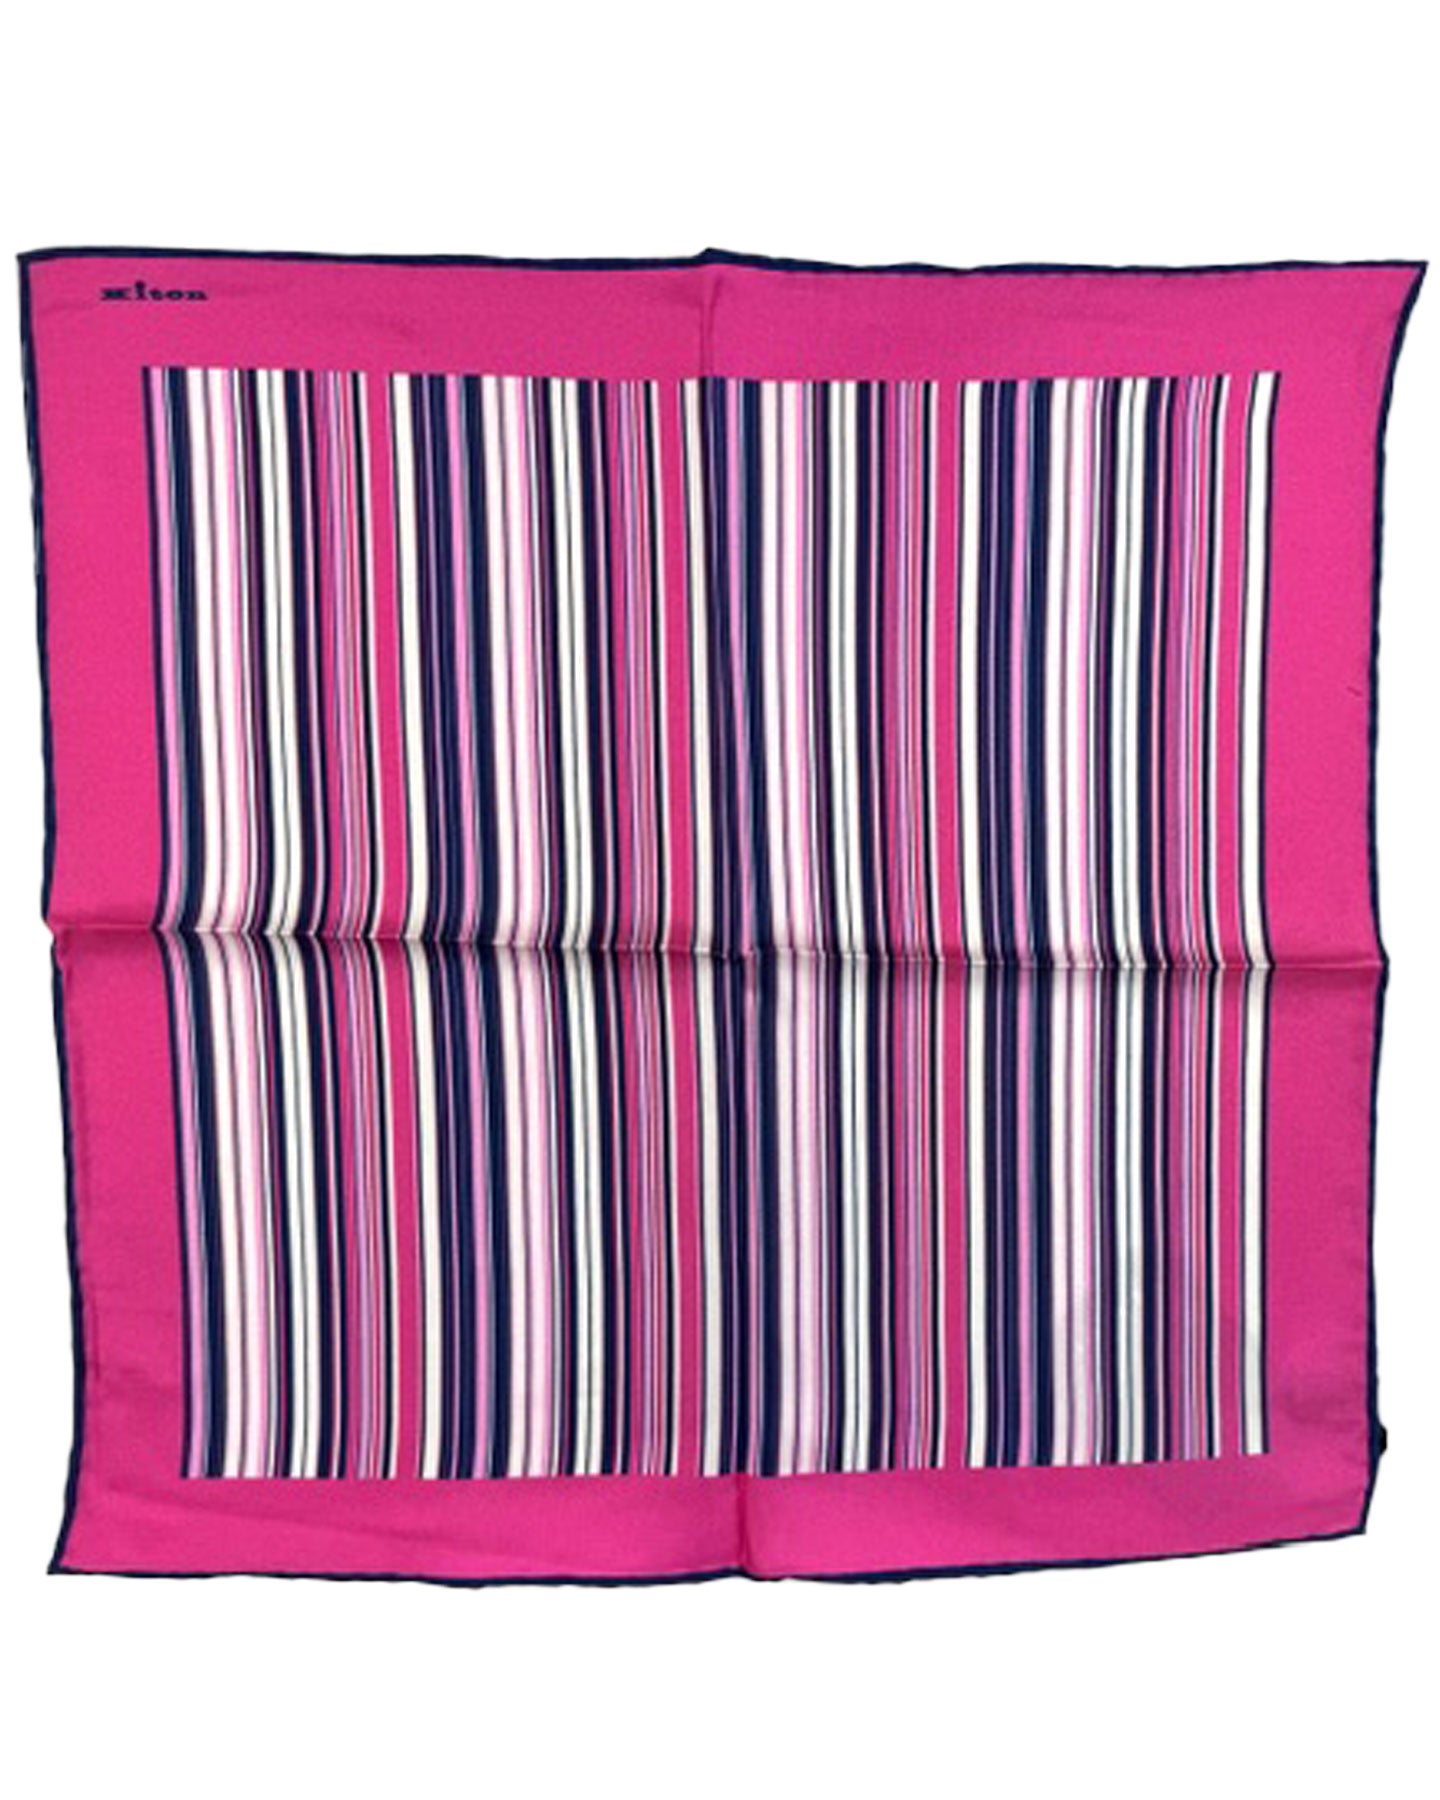 Kiton Silk Pocket Square Pink Navy Stripes